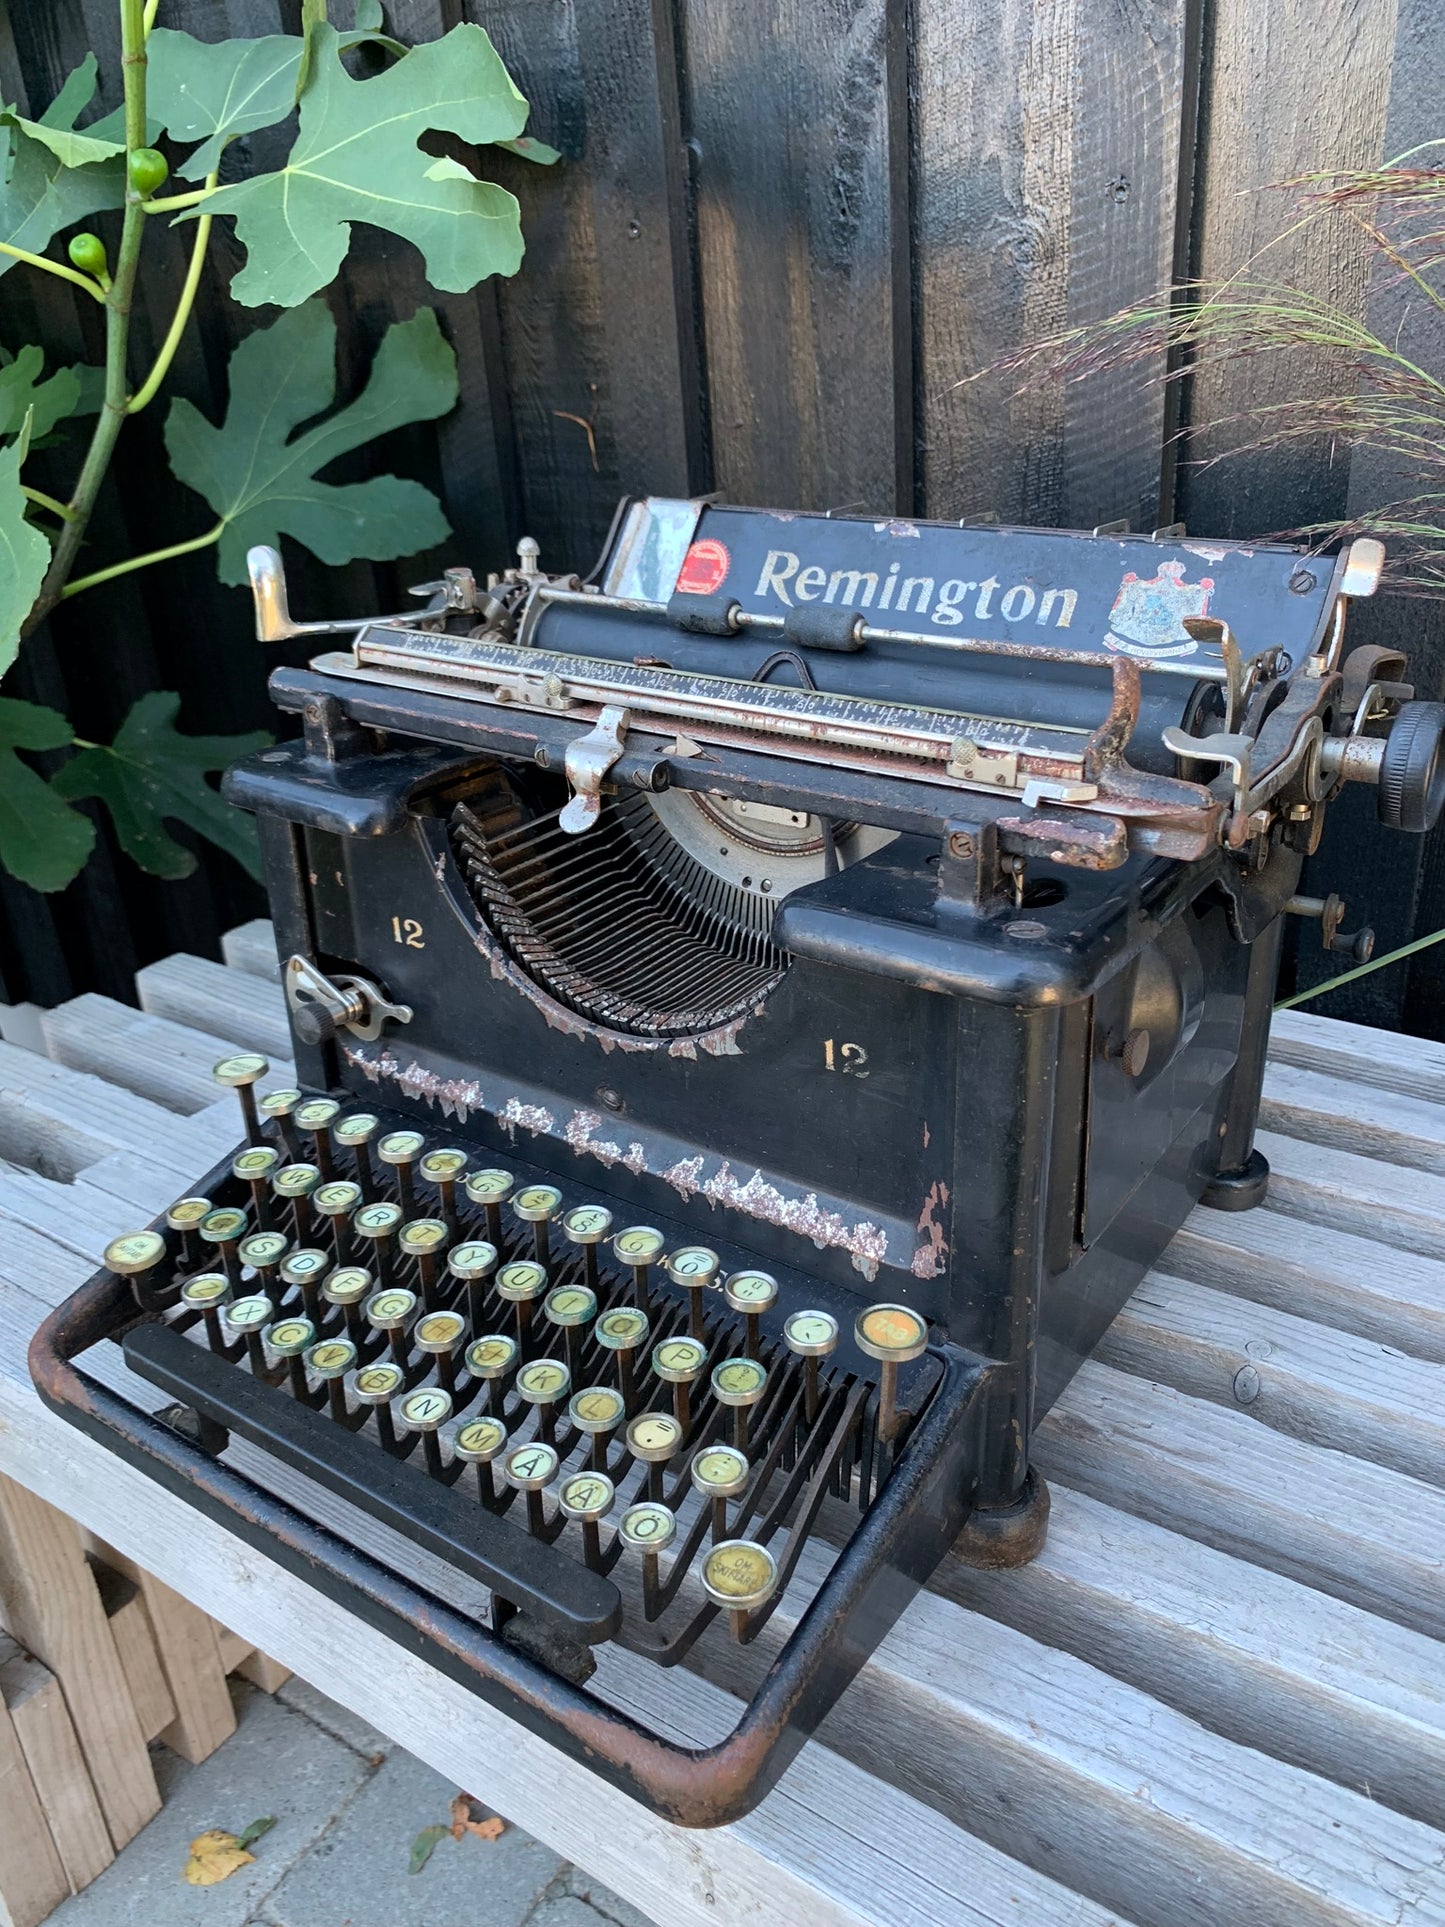 Remington skrivemaskine med skøn patina